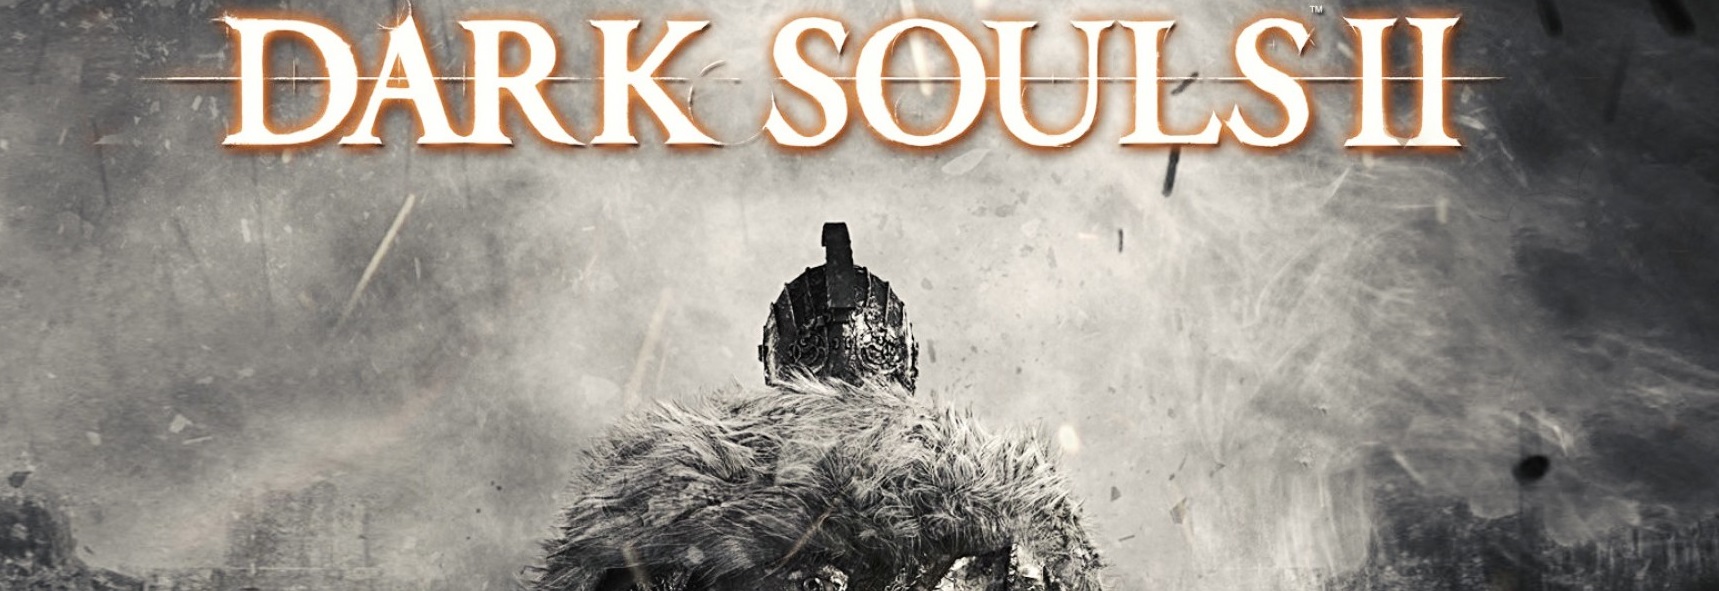 Dark souls 2 walkthrough: majula